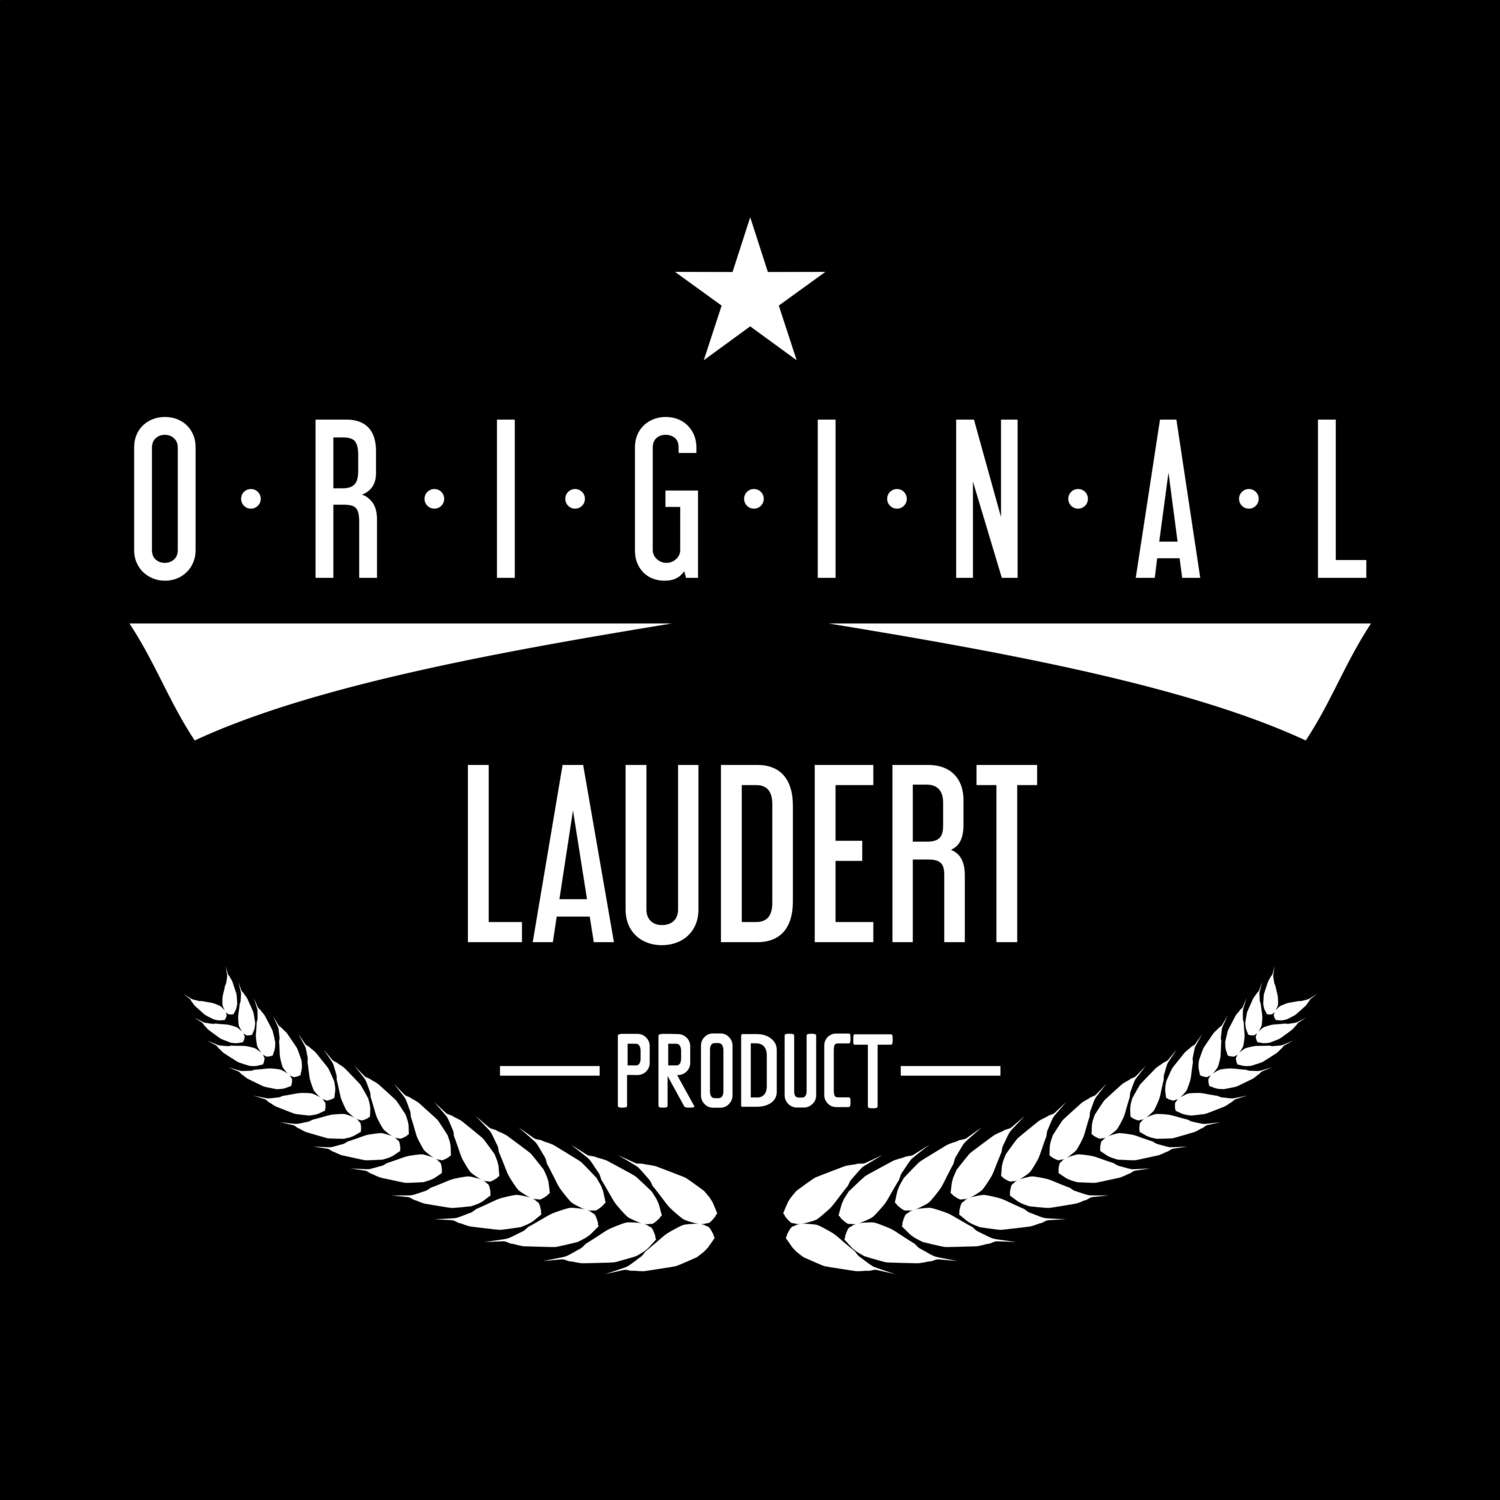 Laudert T-Shirt »Original Product«